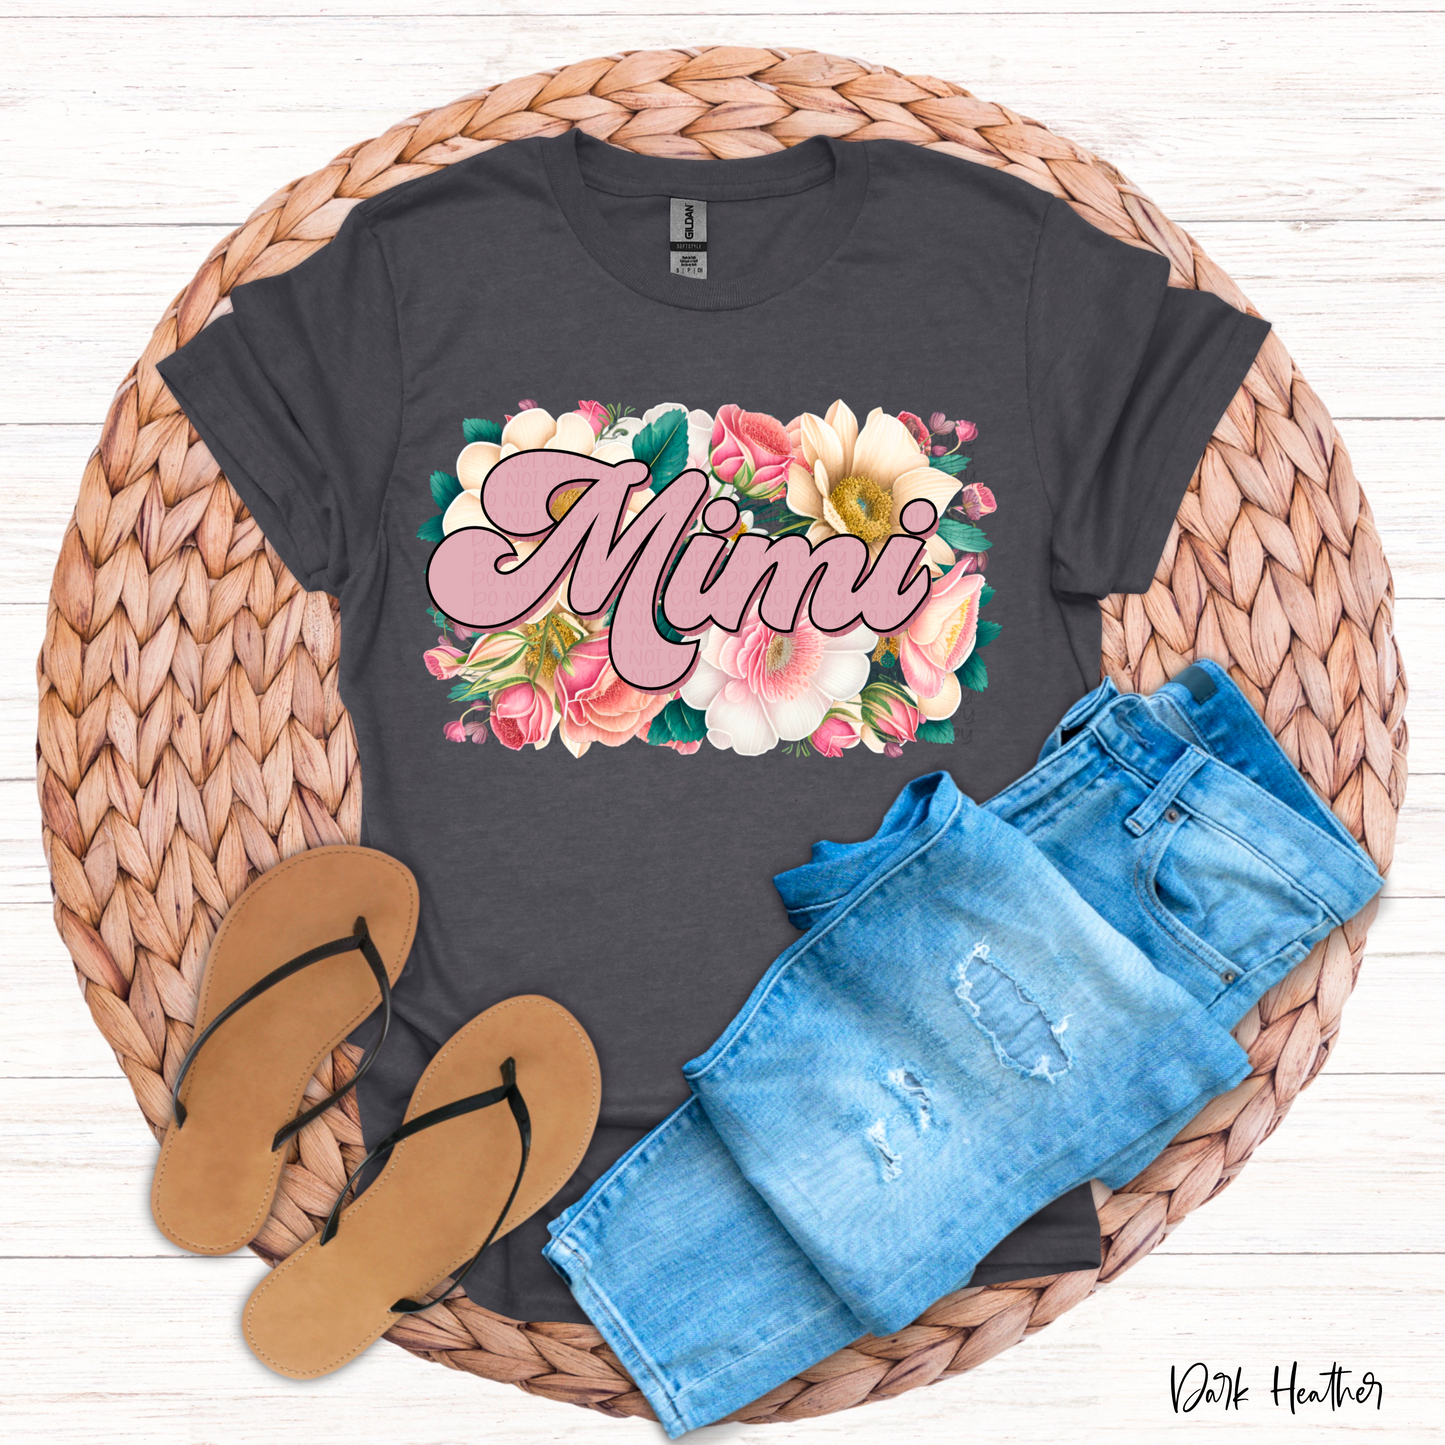 Mama Flower T-Shirt